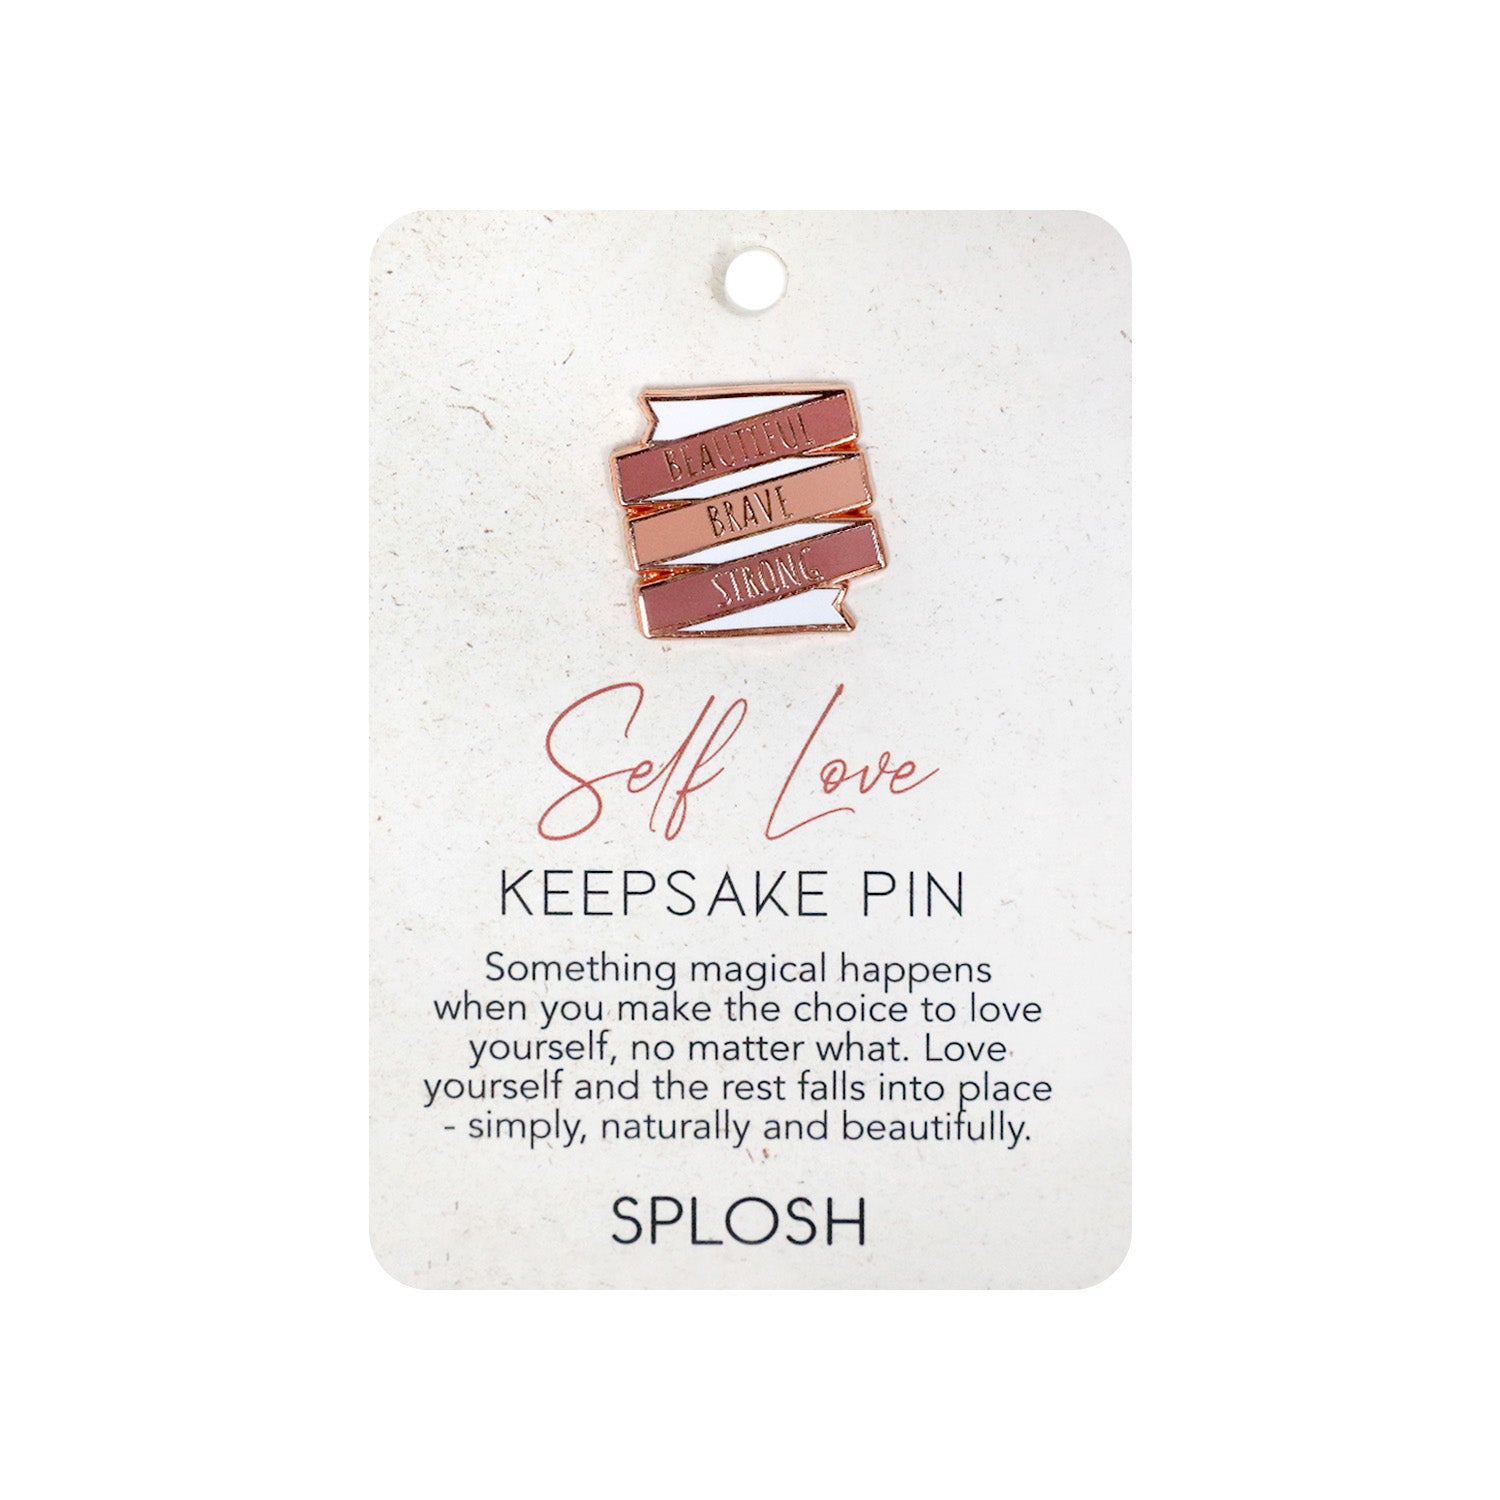 Splosh - Keepsake Pin - Self Love